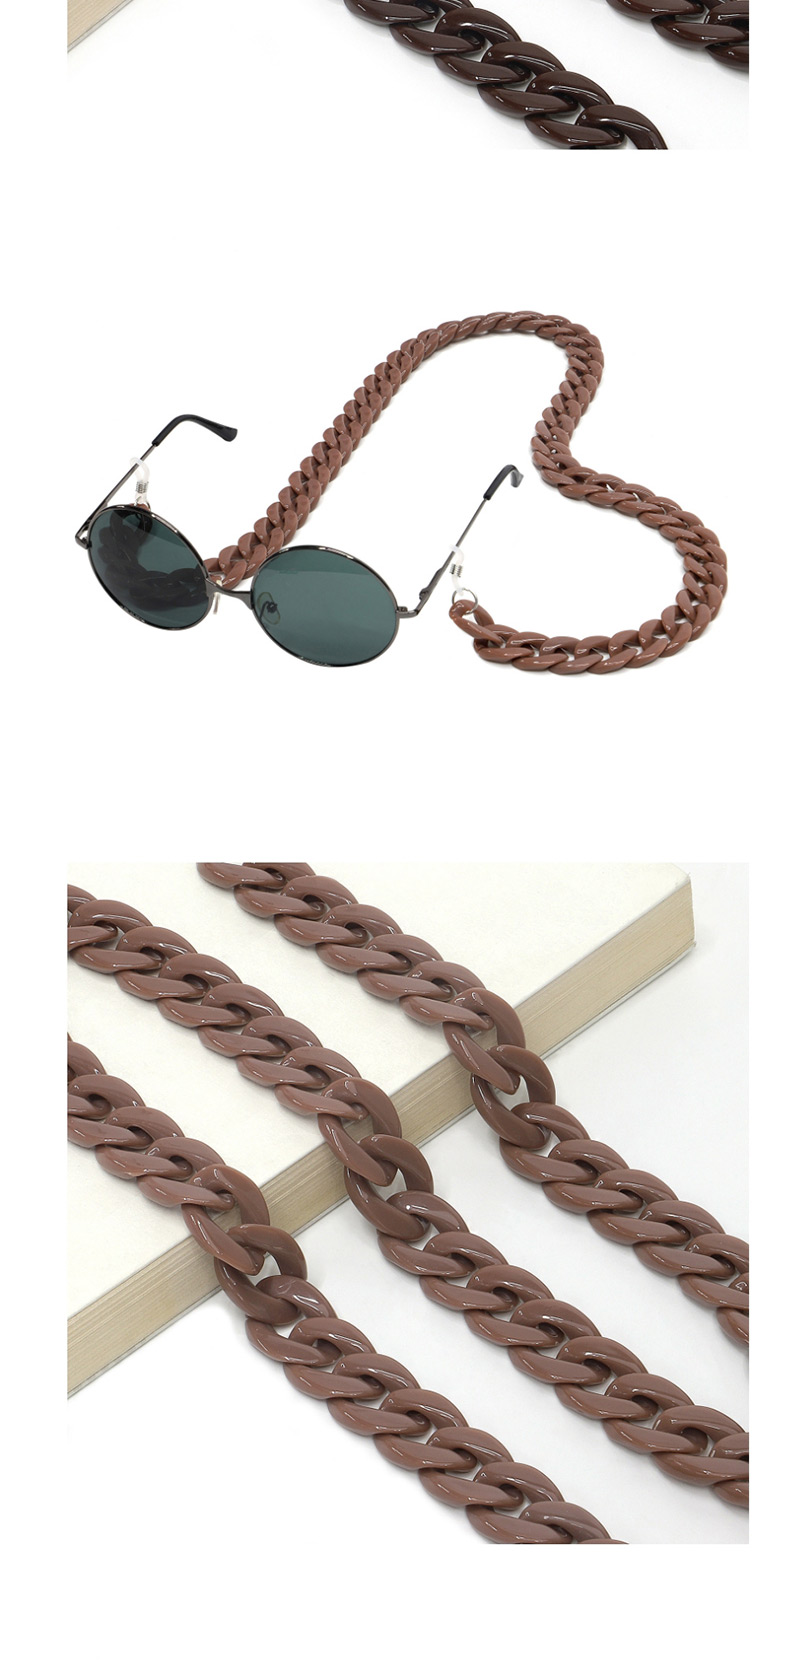  Creamy-white Acrylic Glasses Chain,Sunglasses Chain